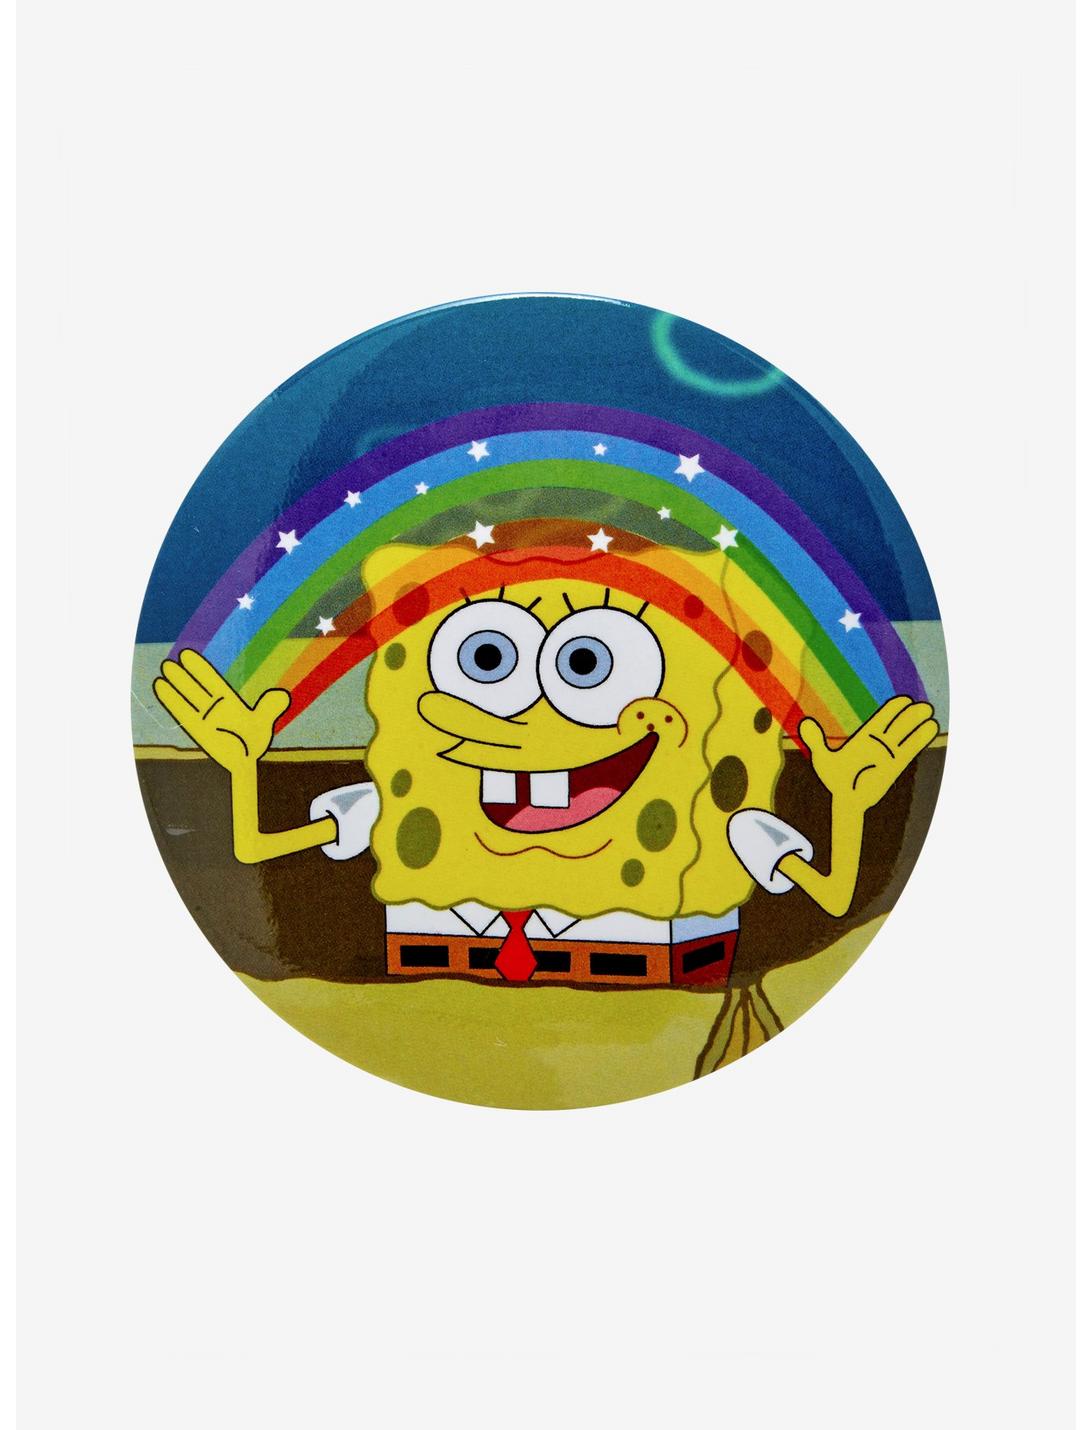 SpongeBob SquarePants Imagination Rainbow Button, , hi-res